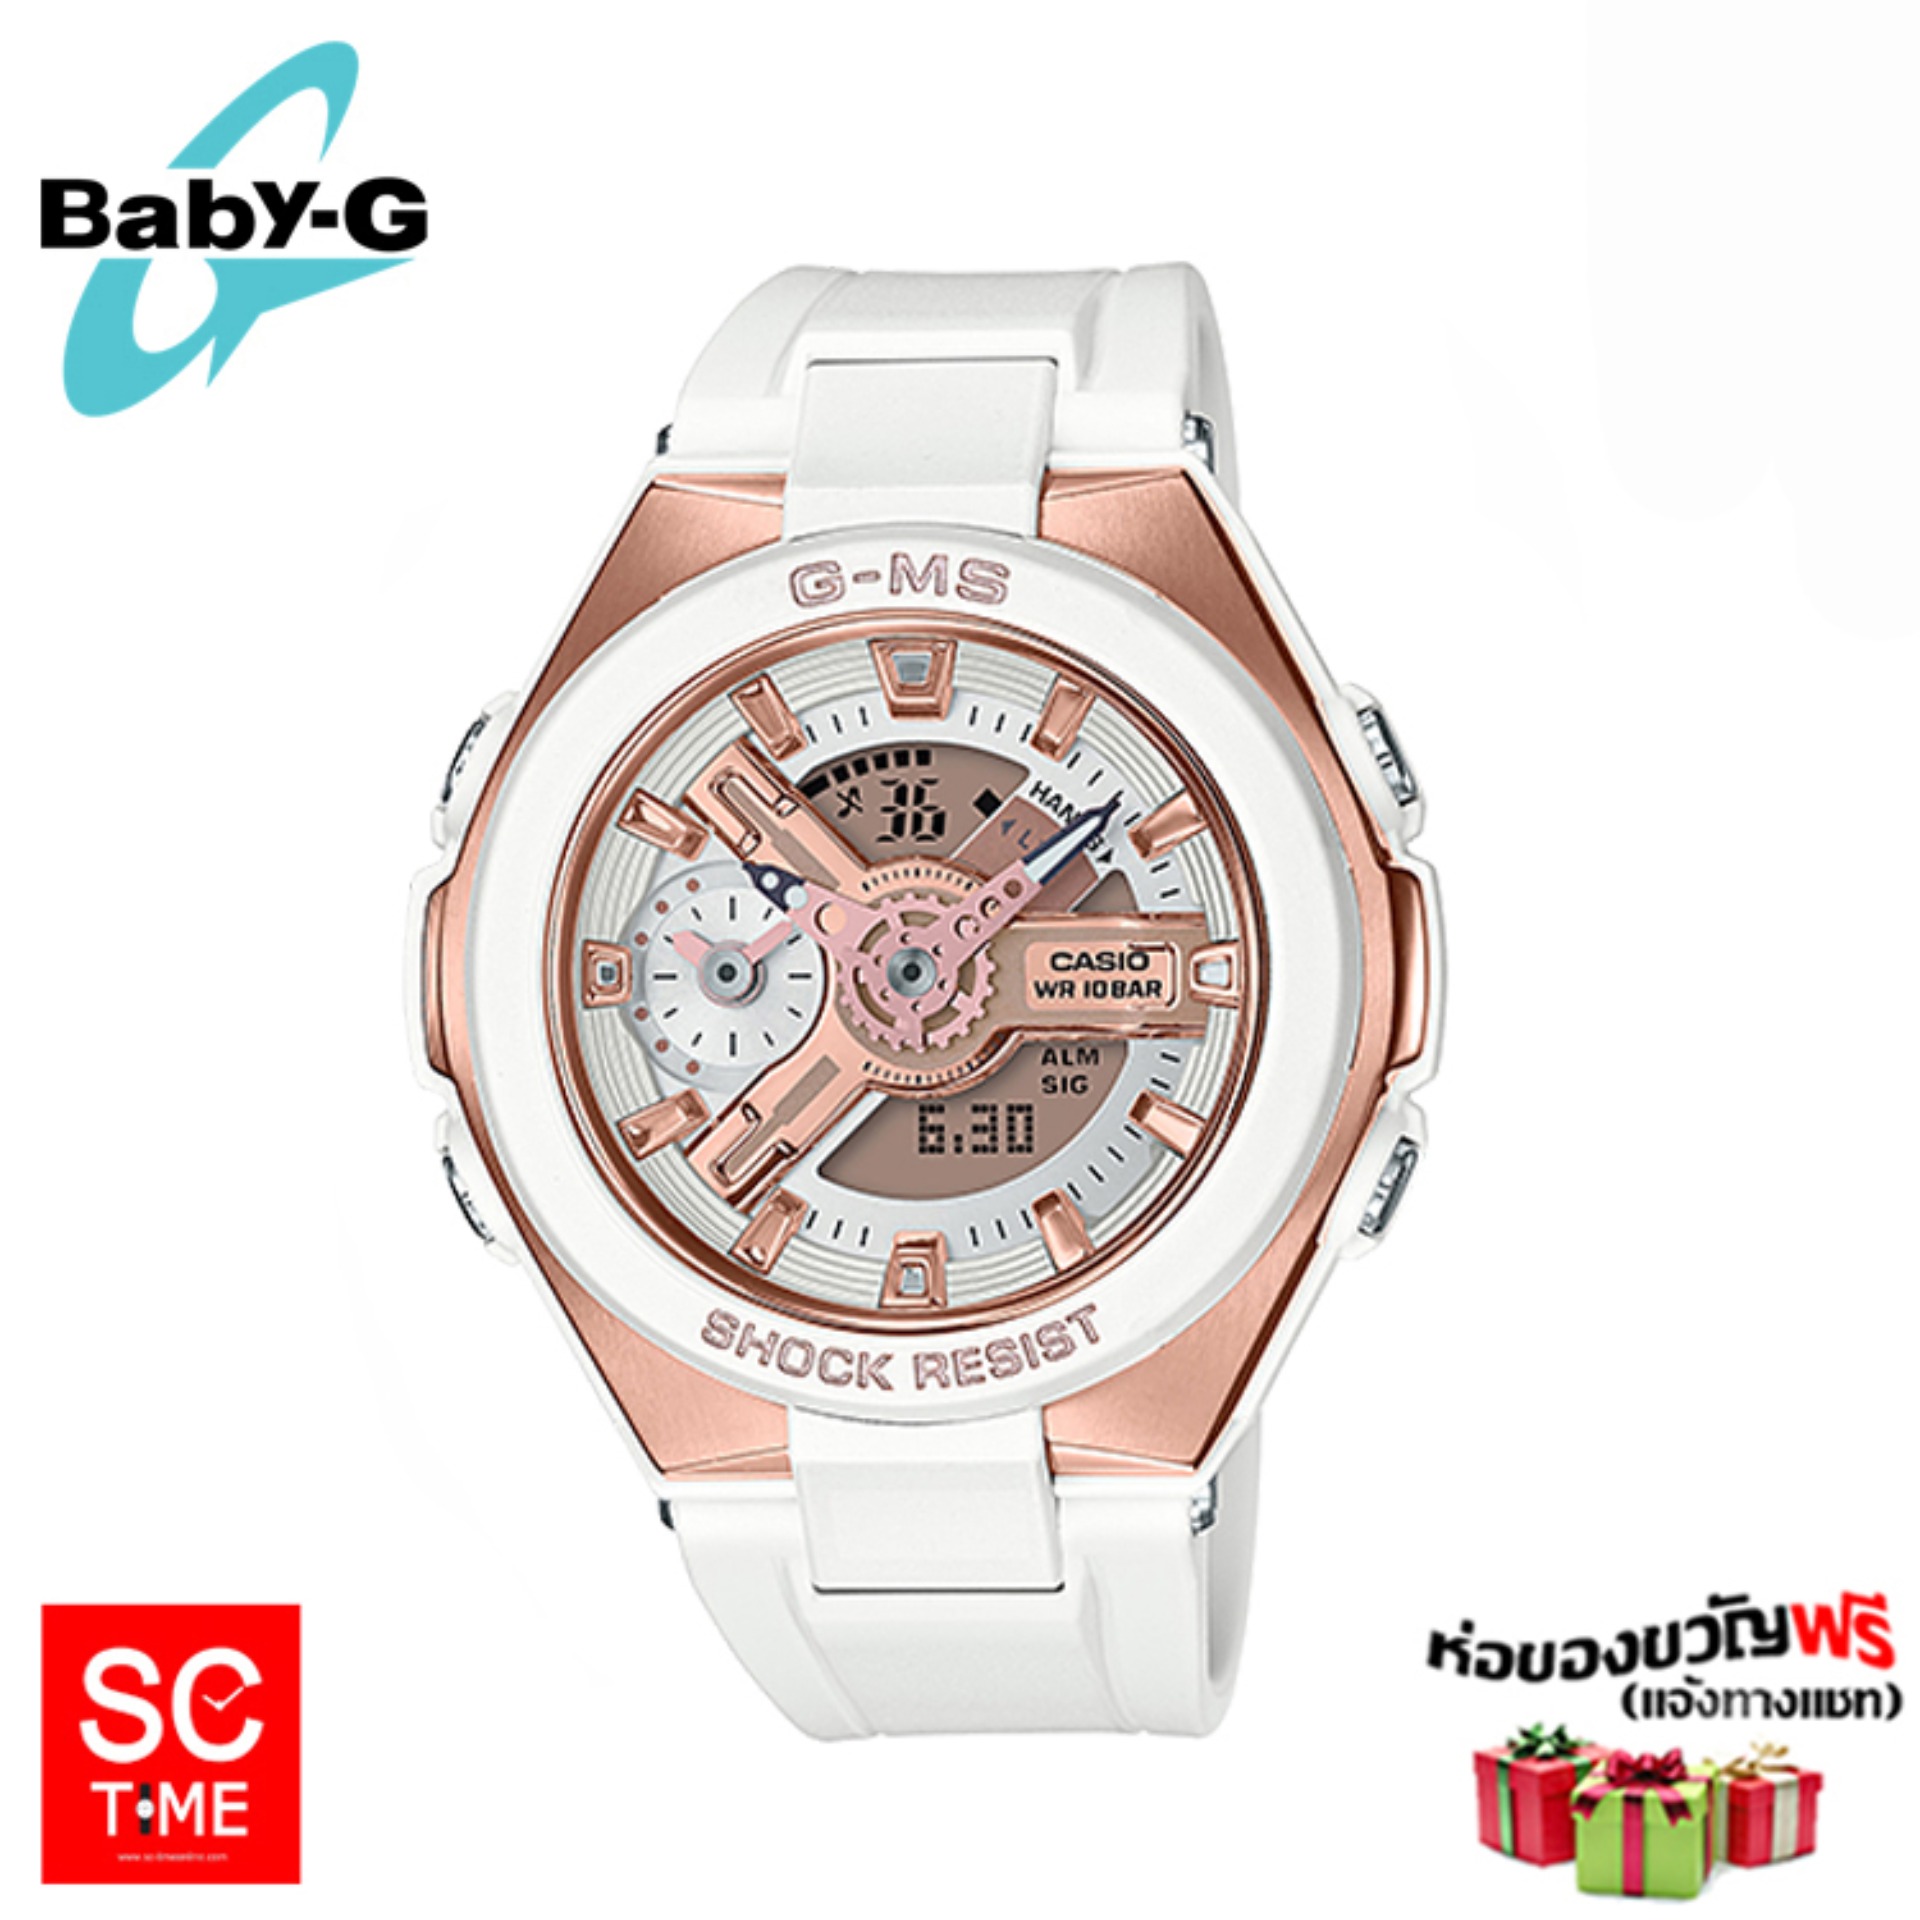 Casio Baby-G แท้ นาฬิกาข้อมือหญิง รุ่น MSG-400G  (สินค้าใหม่ ของแท้ มีรับประกัน)  สีสายนาฬิกา สีขาว